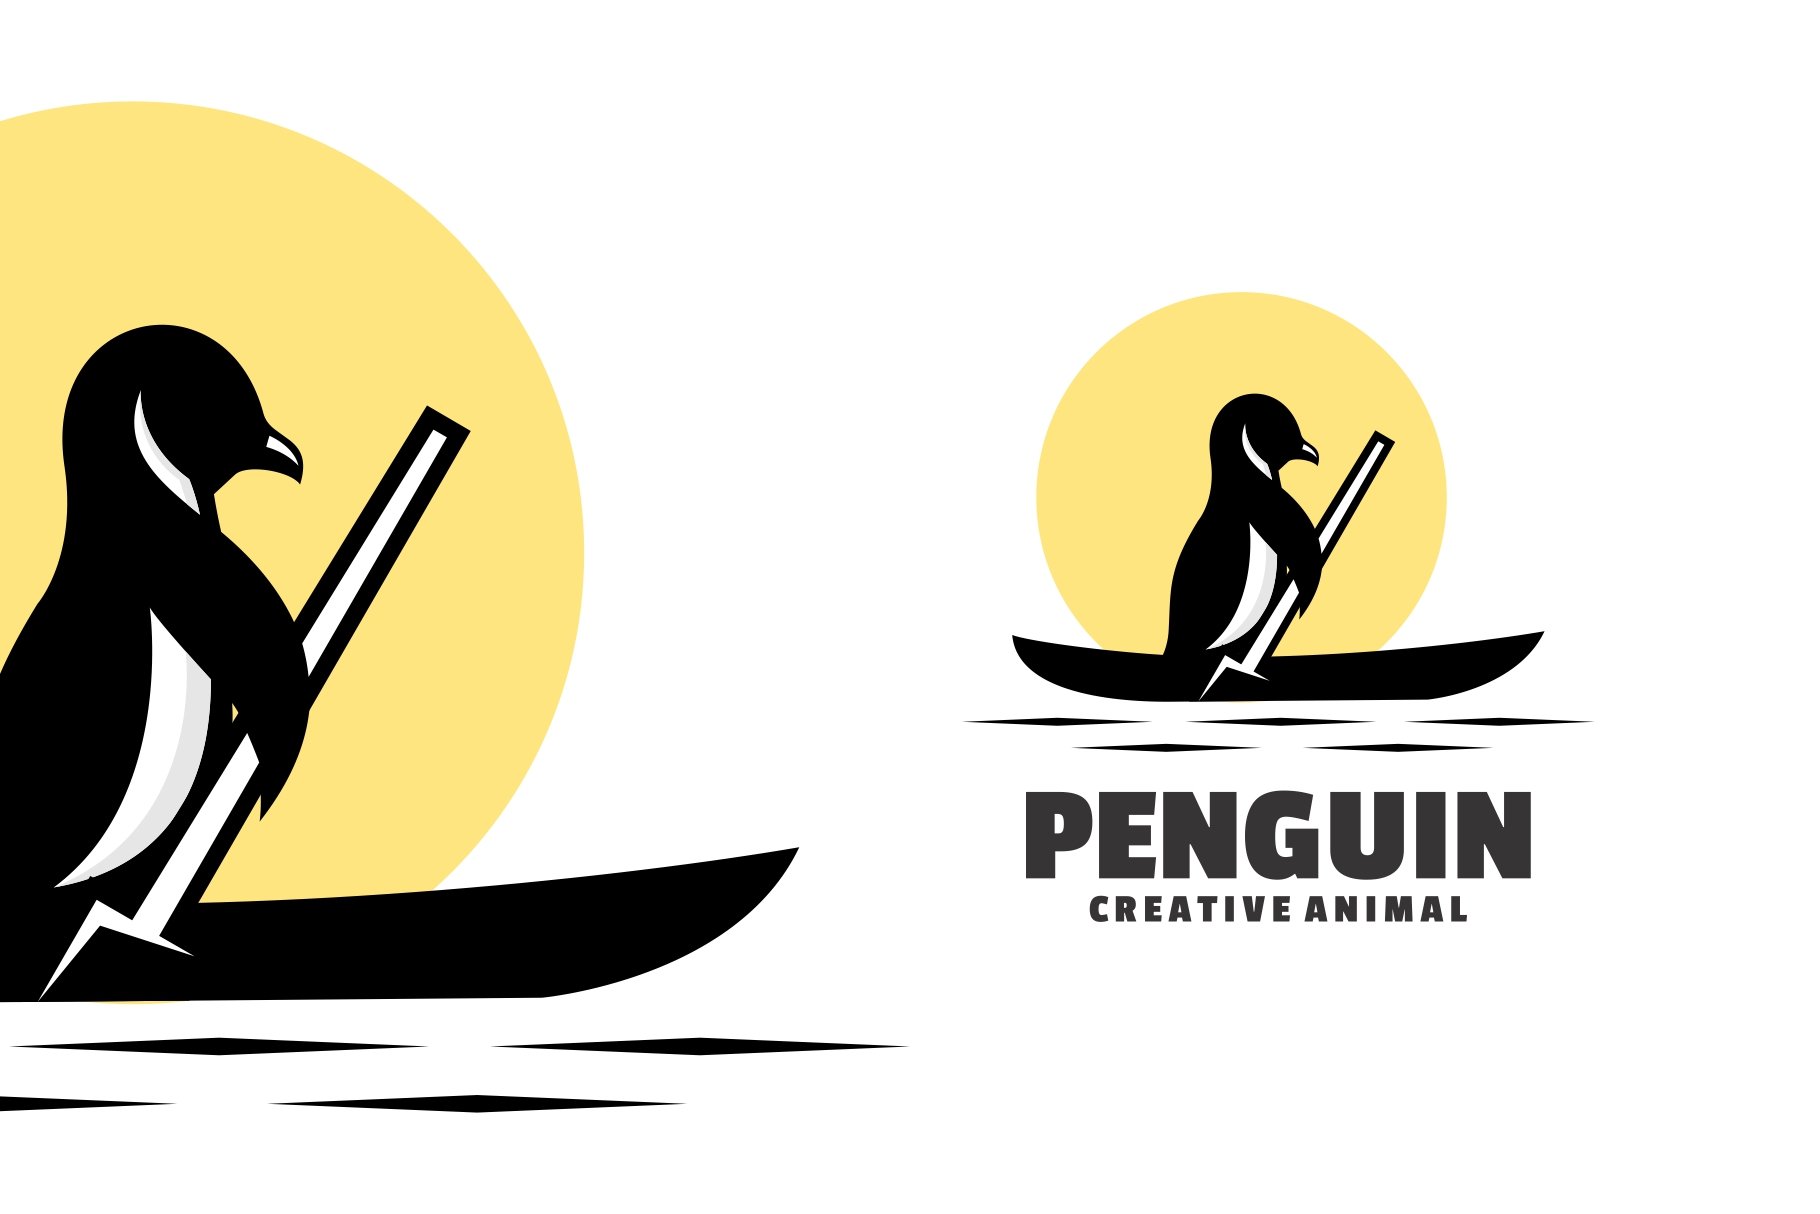 Penguin Silhouette Logo cover image.